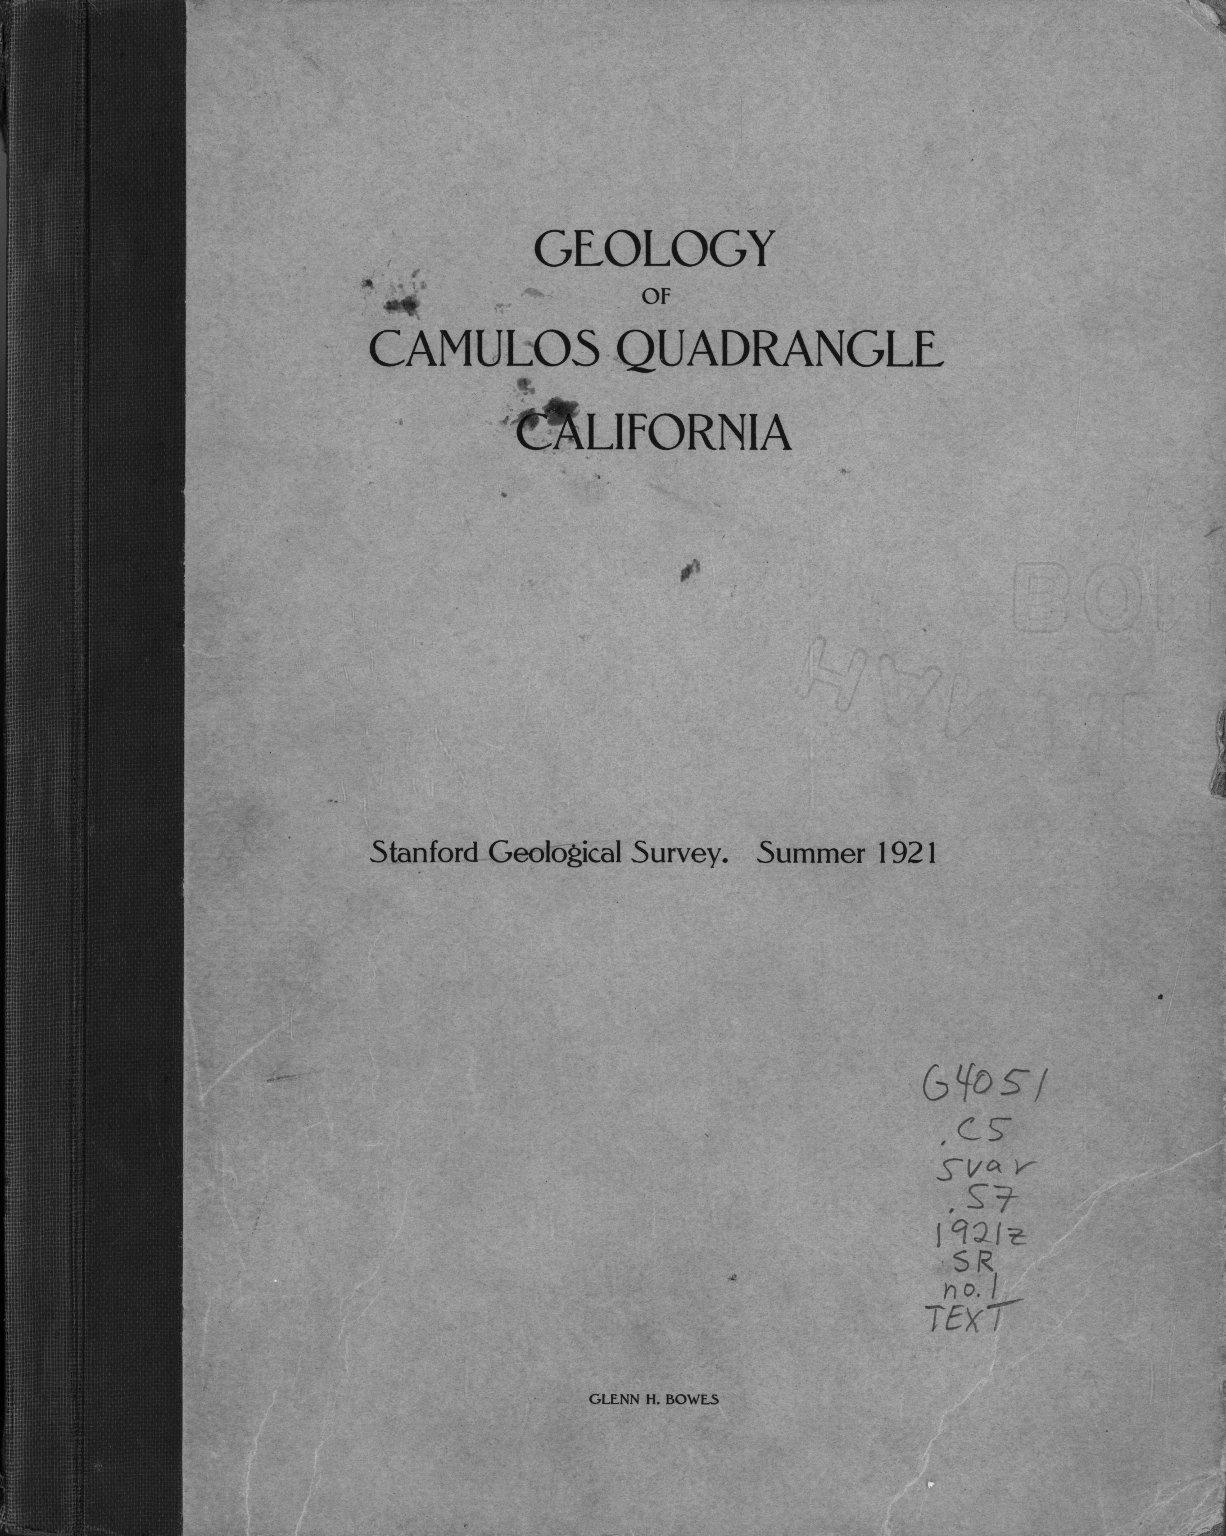 Geology of Camulos quadrangle, California